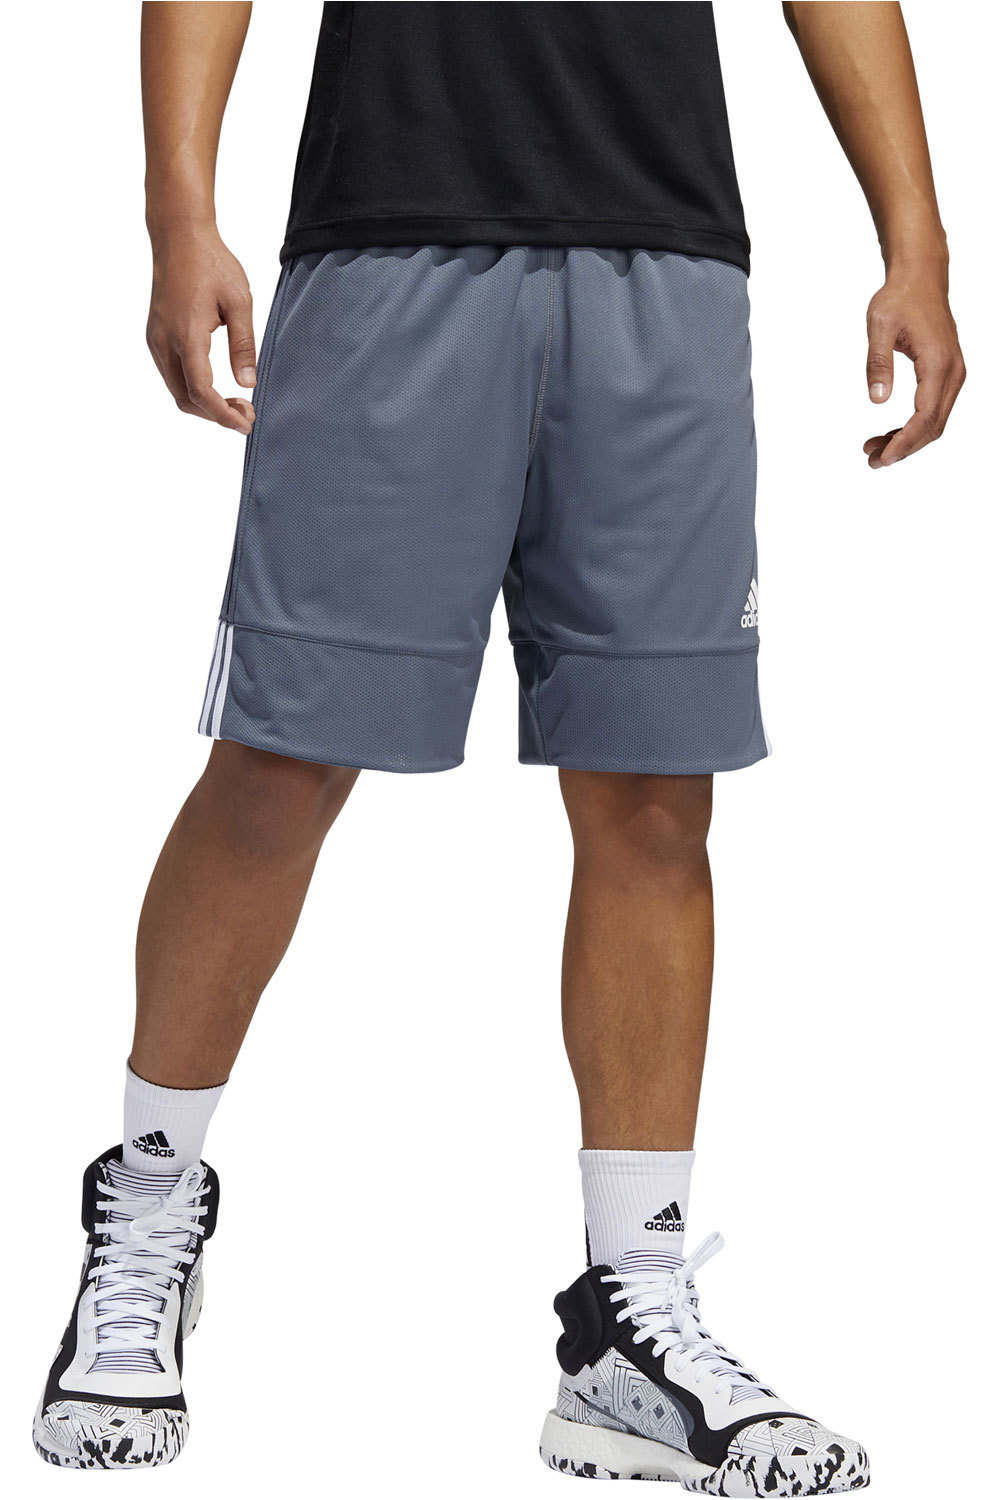 adidas pantalón baloncesto 3G SPEE REV SHR vista frontal